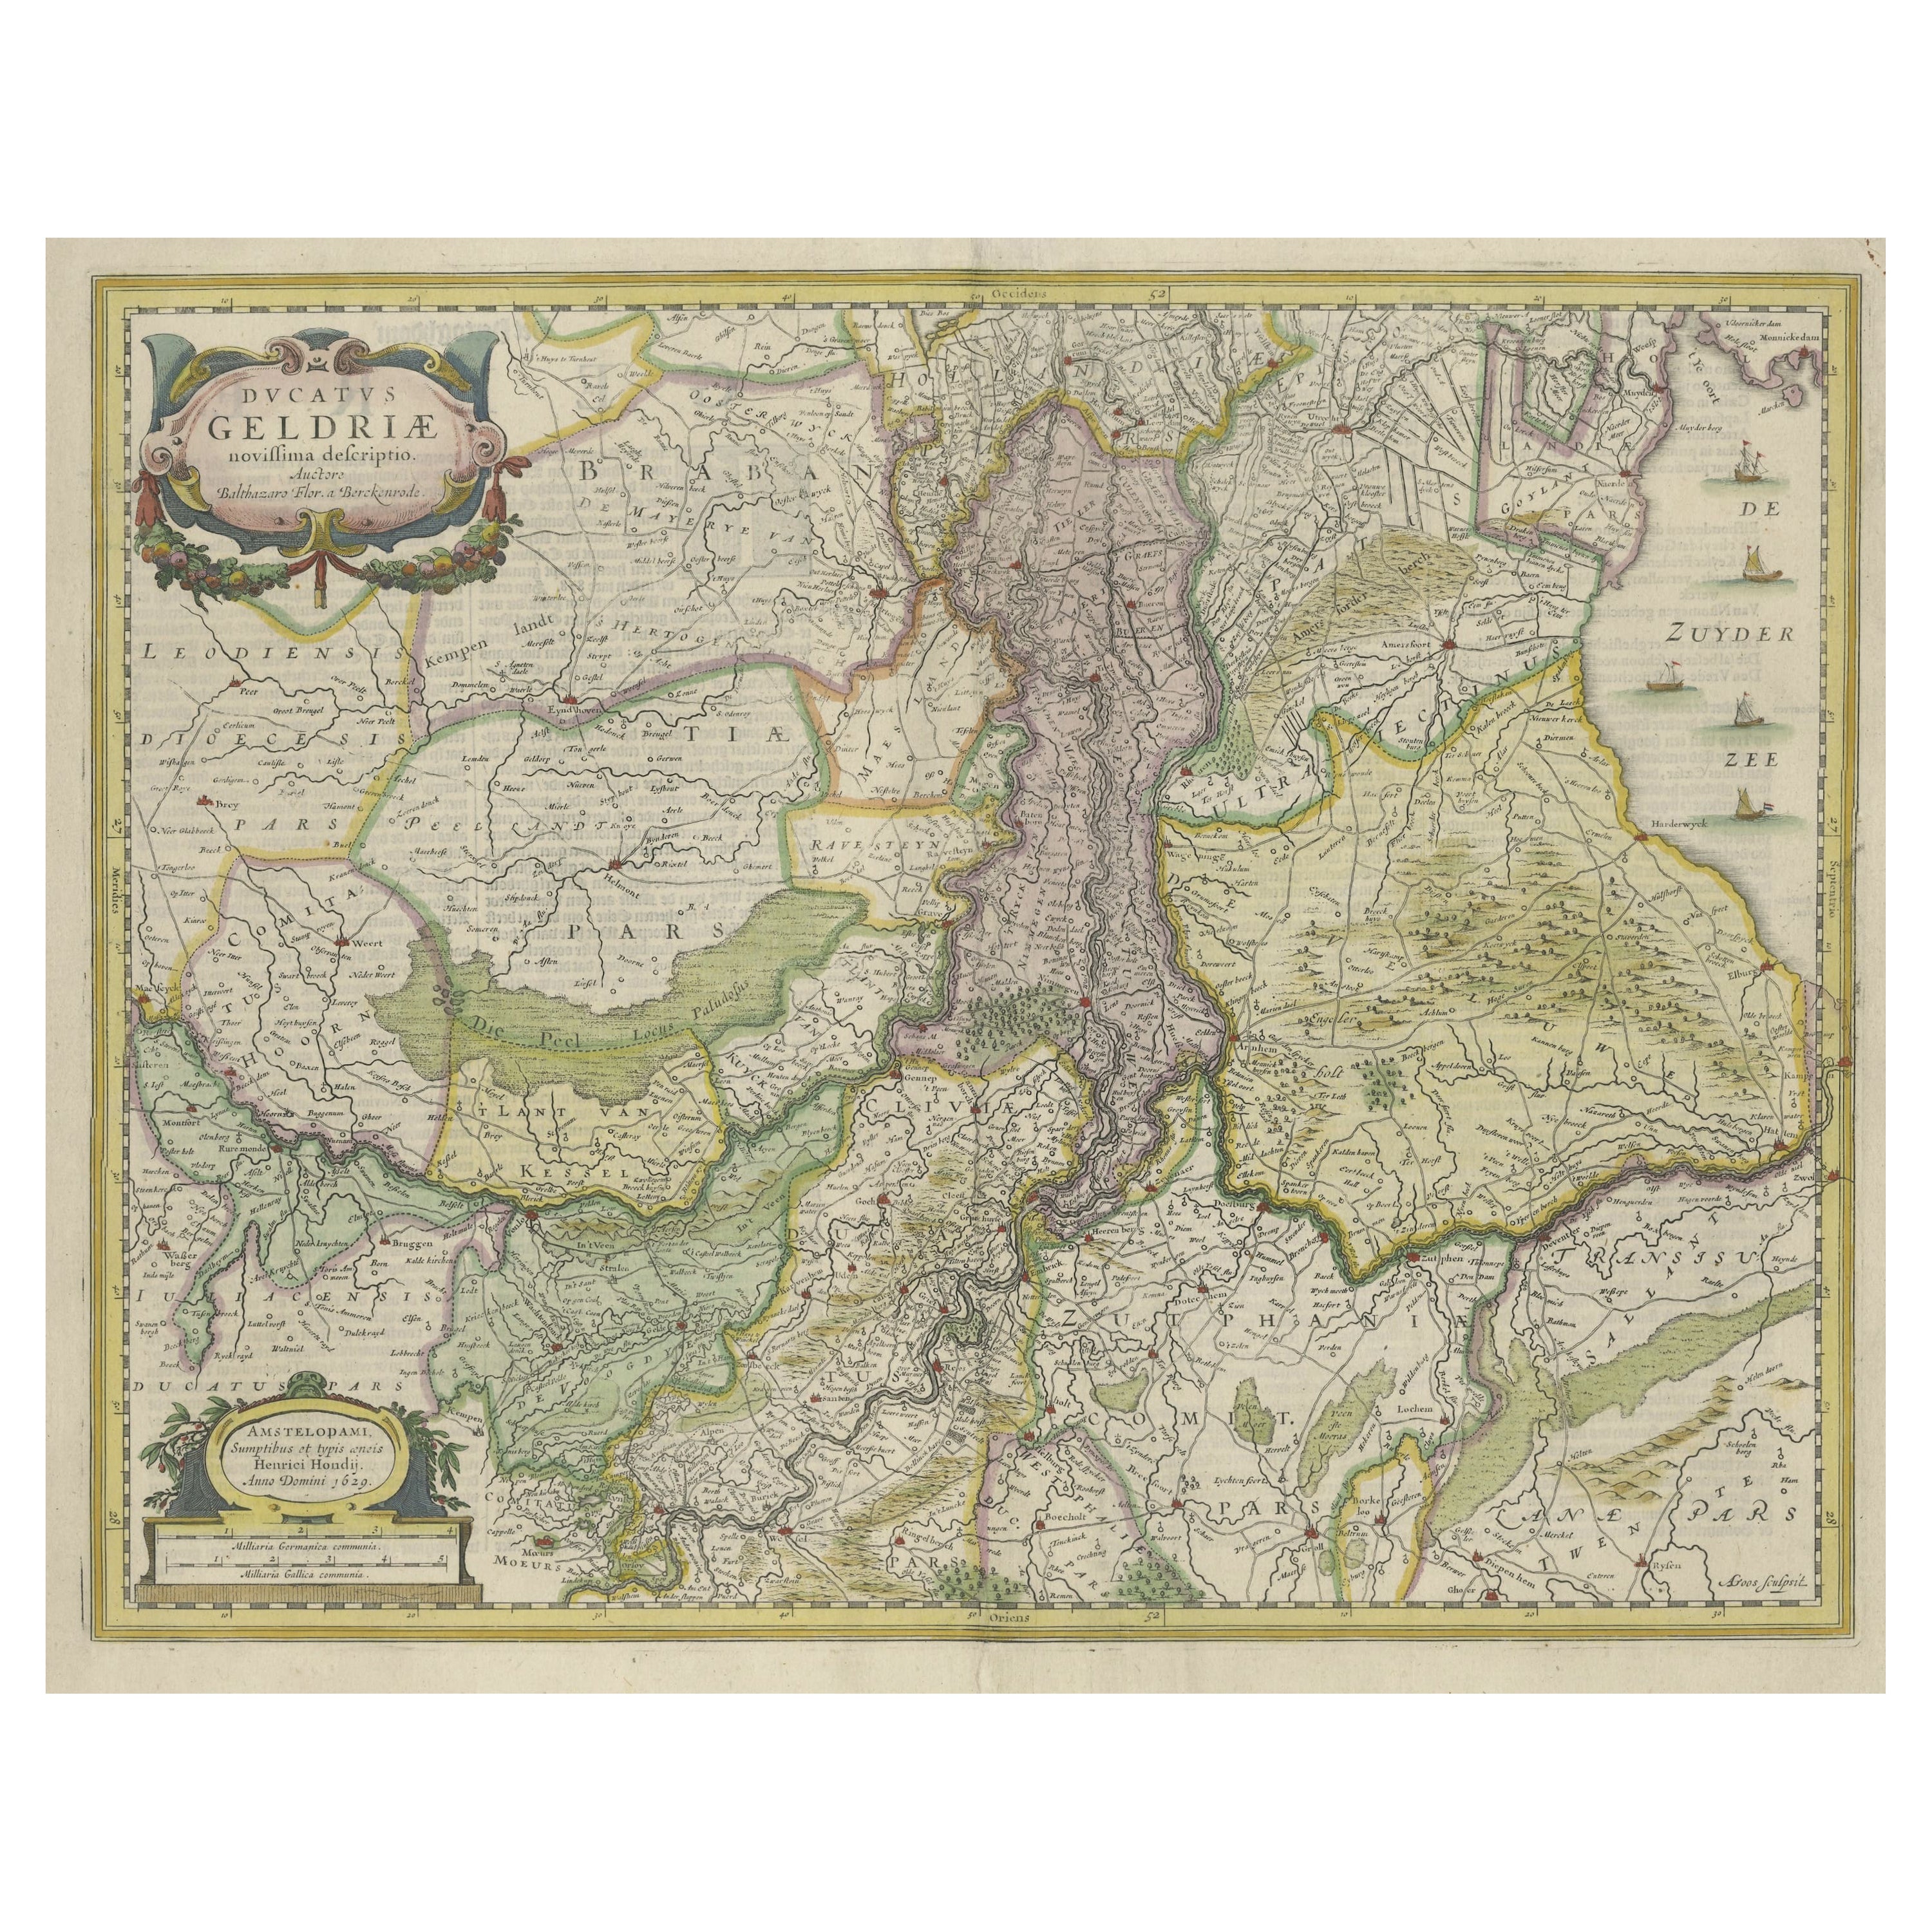 Original Hand-Colored Antique Map of Gelderland and Utrecht in the Netherlands For Sale